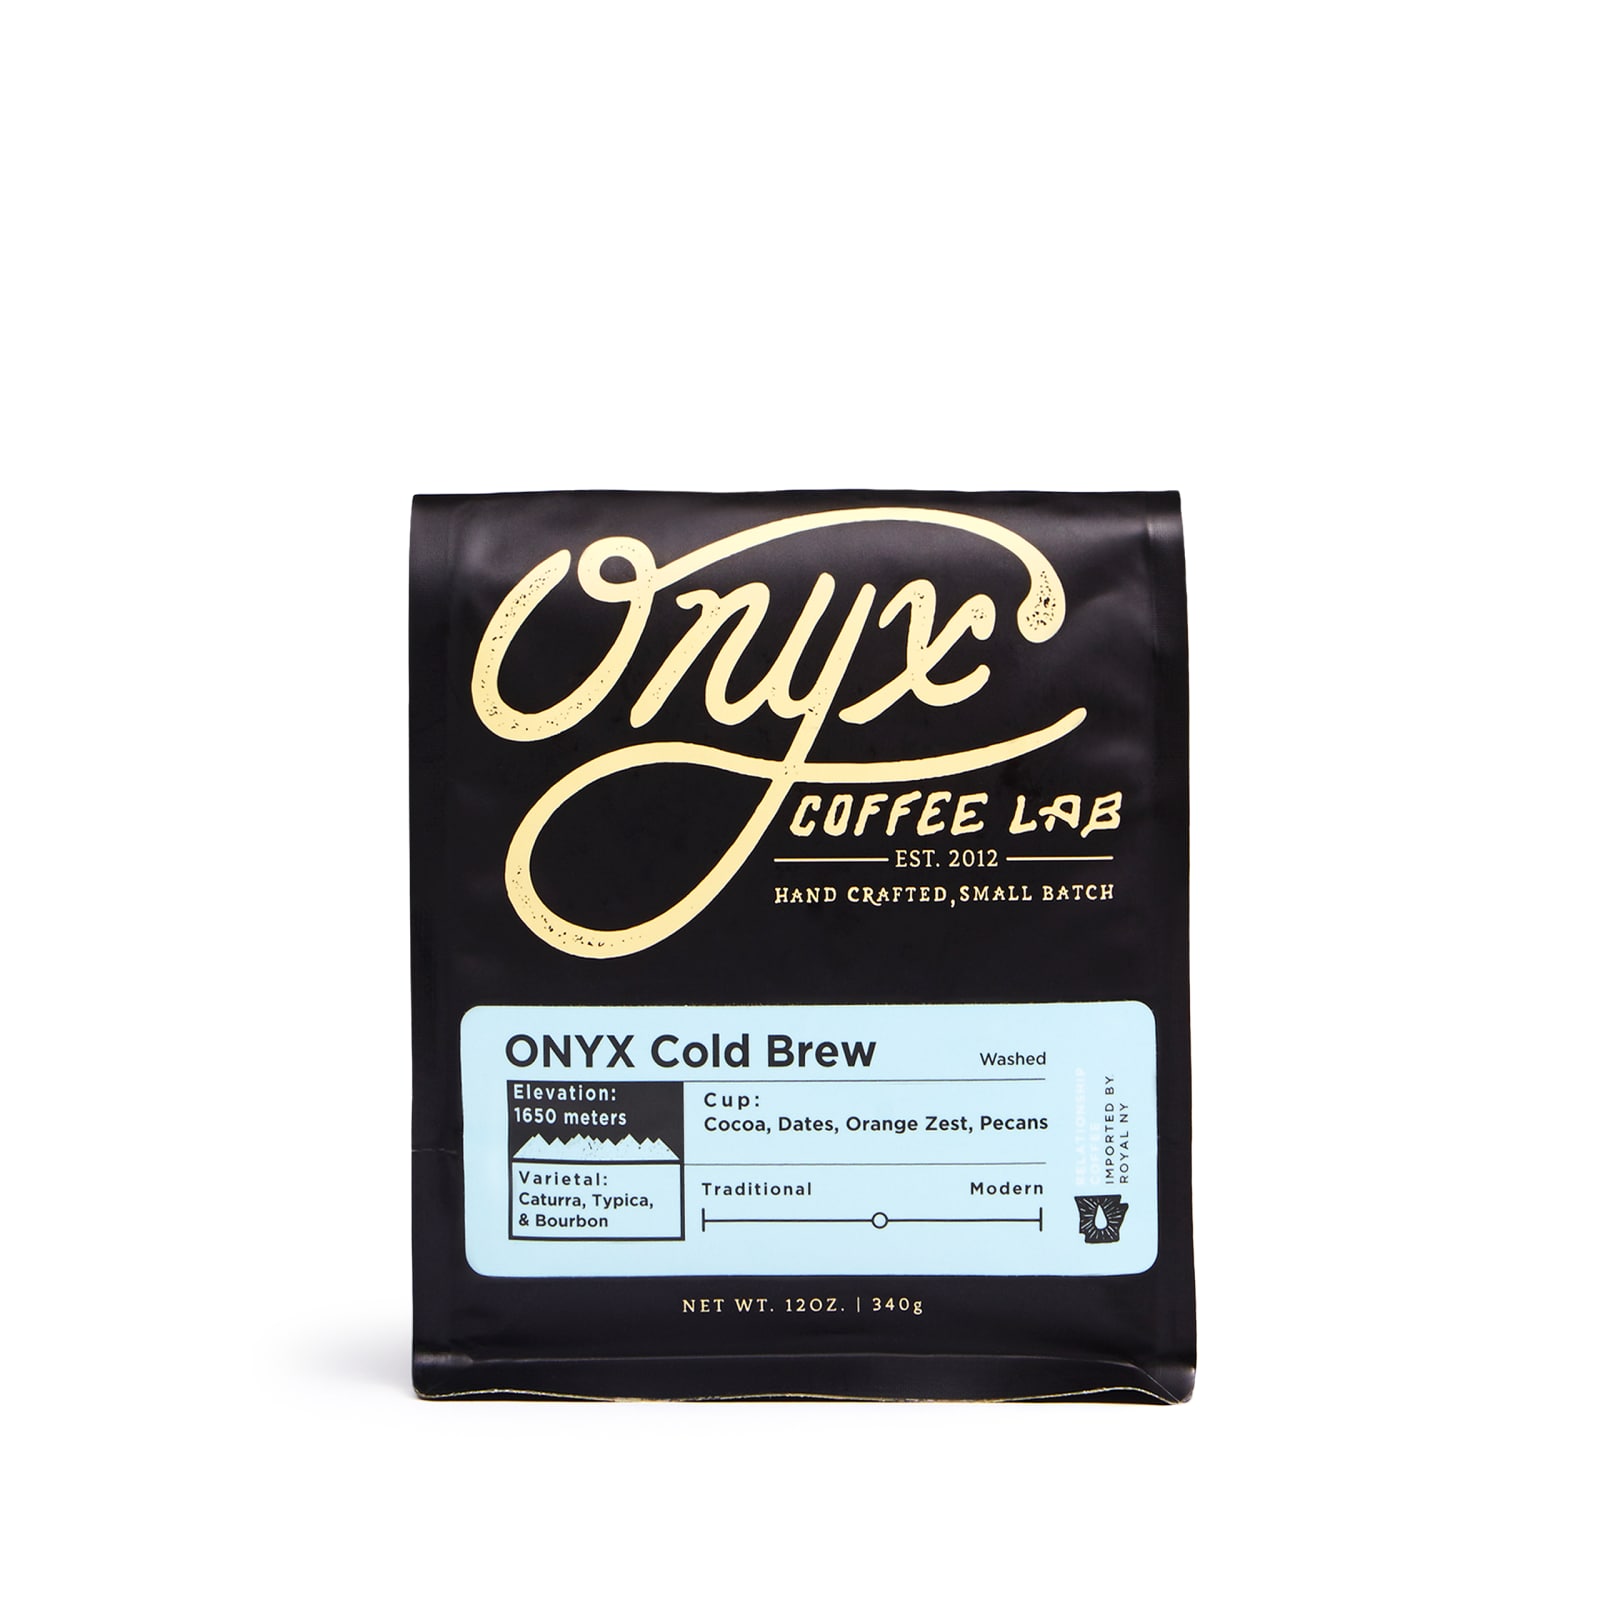 Onyx Cold Brew coffee bag